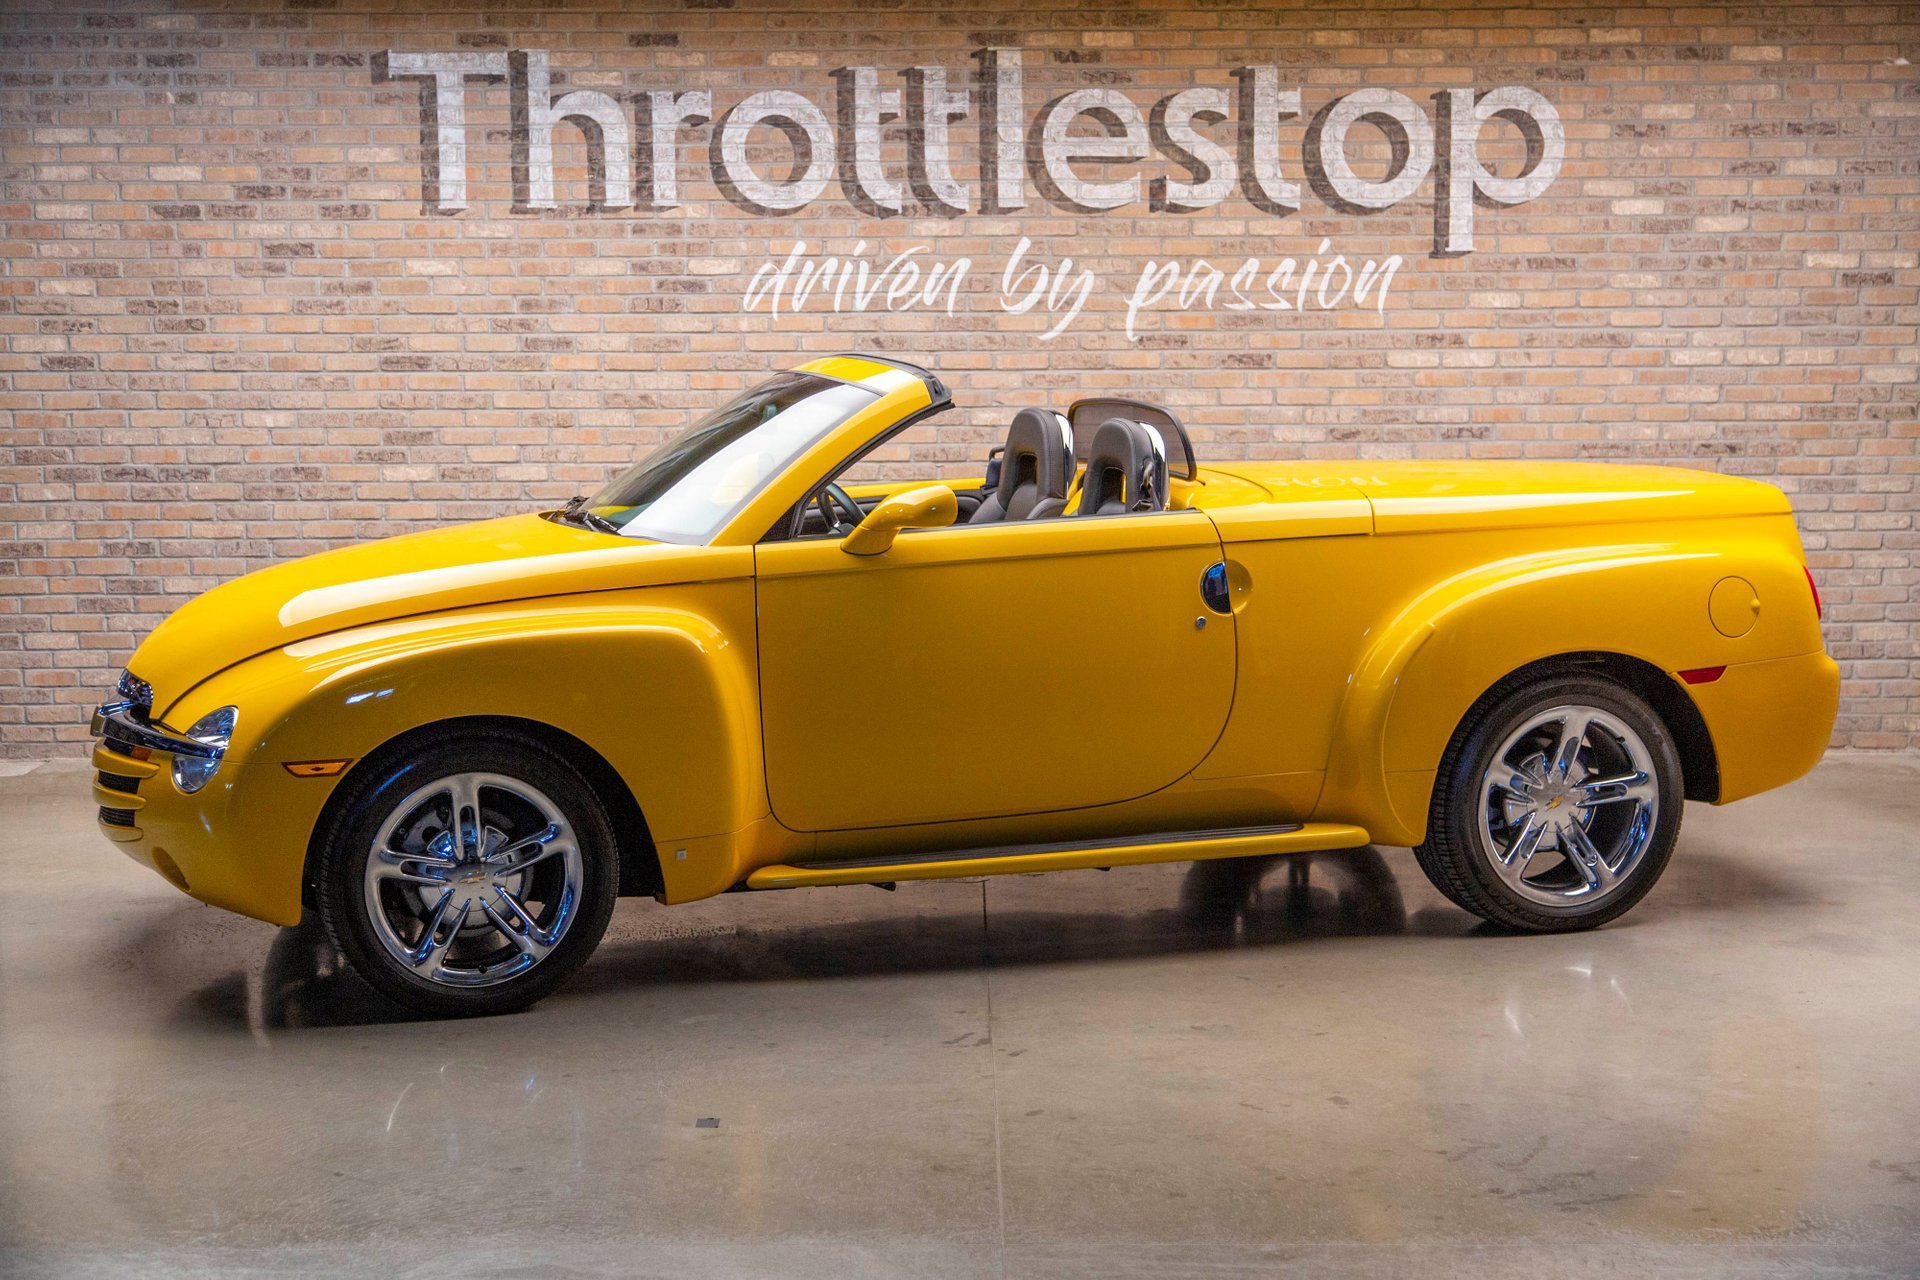 2006 Chevrolet SSR | Throttlestop | Consignment Dealer & Motorcycle Museum